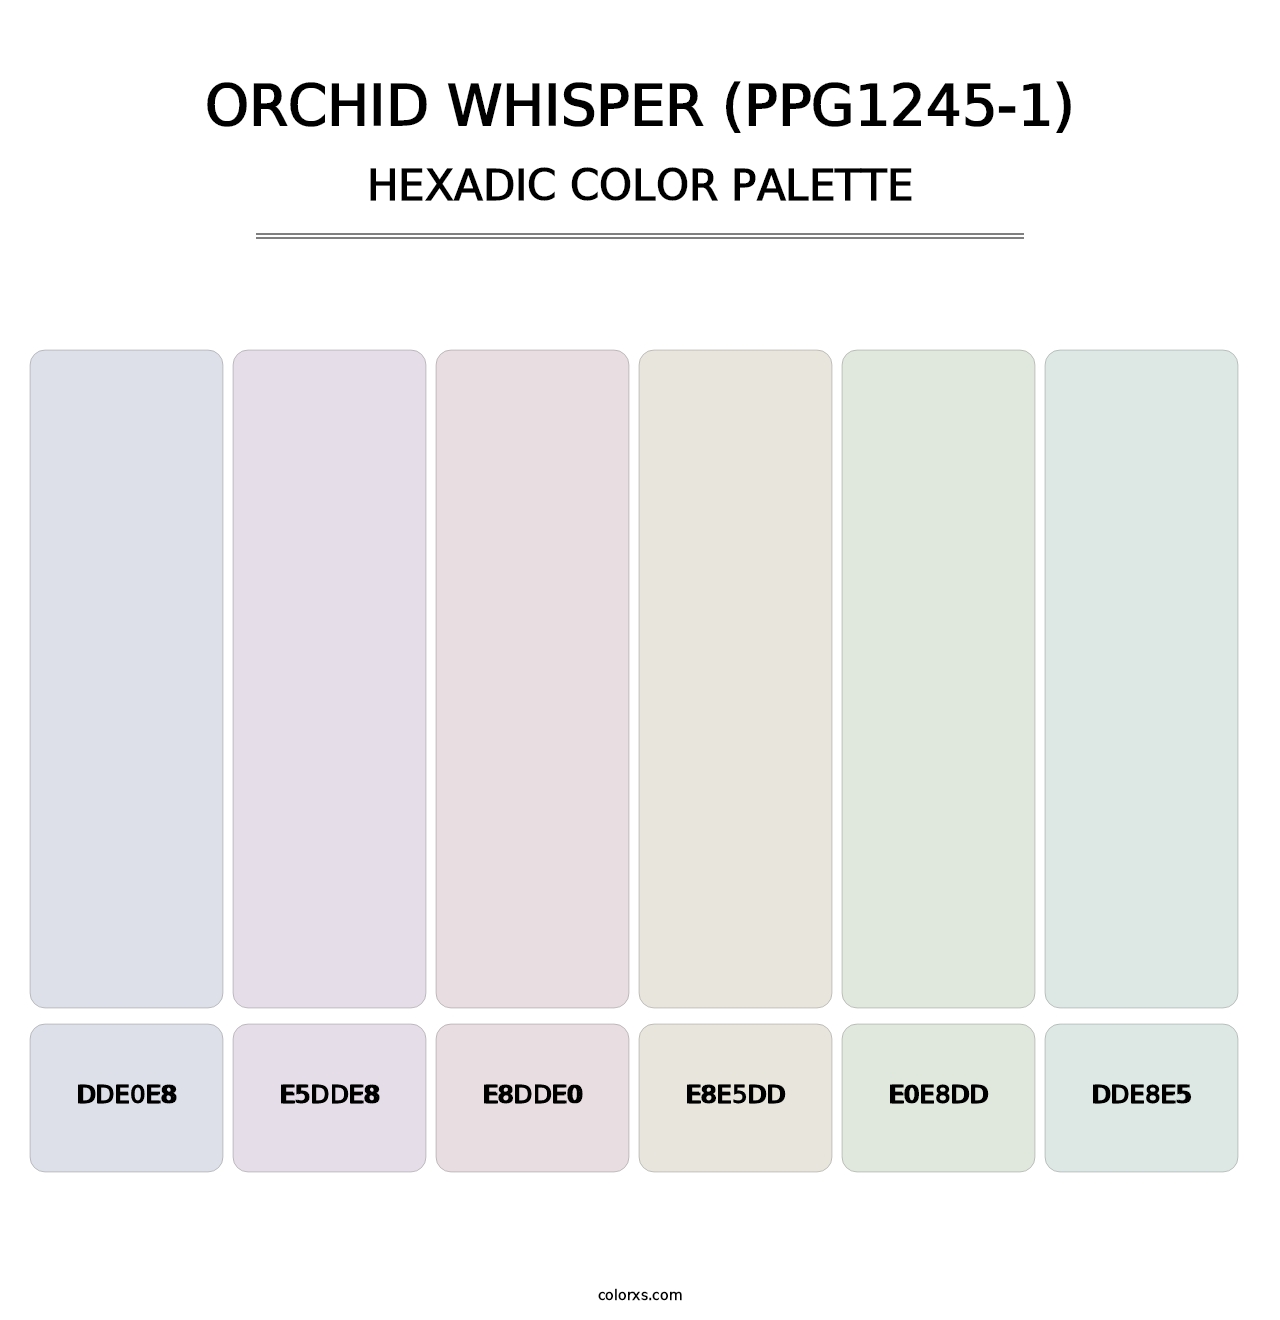 Orchid Whisper (PPG1245-1) - Hexadic Color Palette